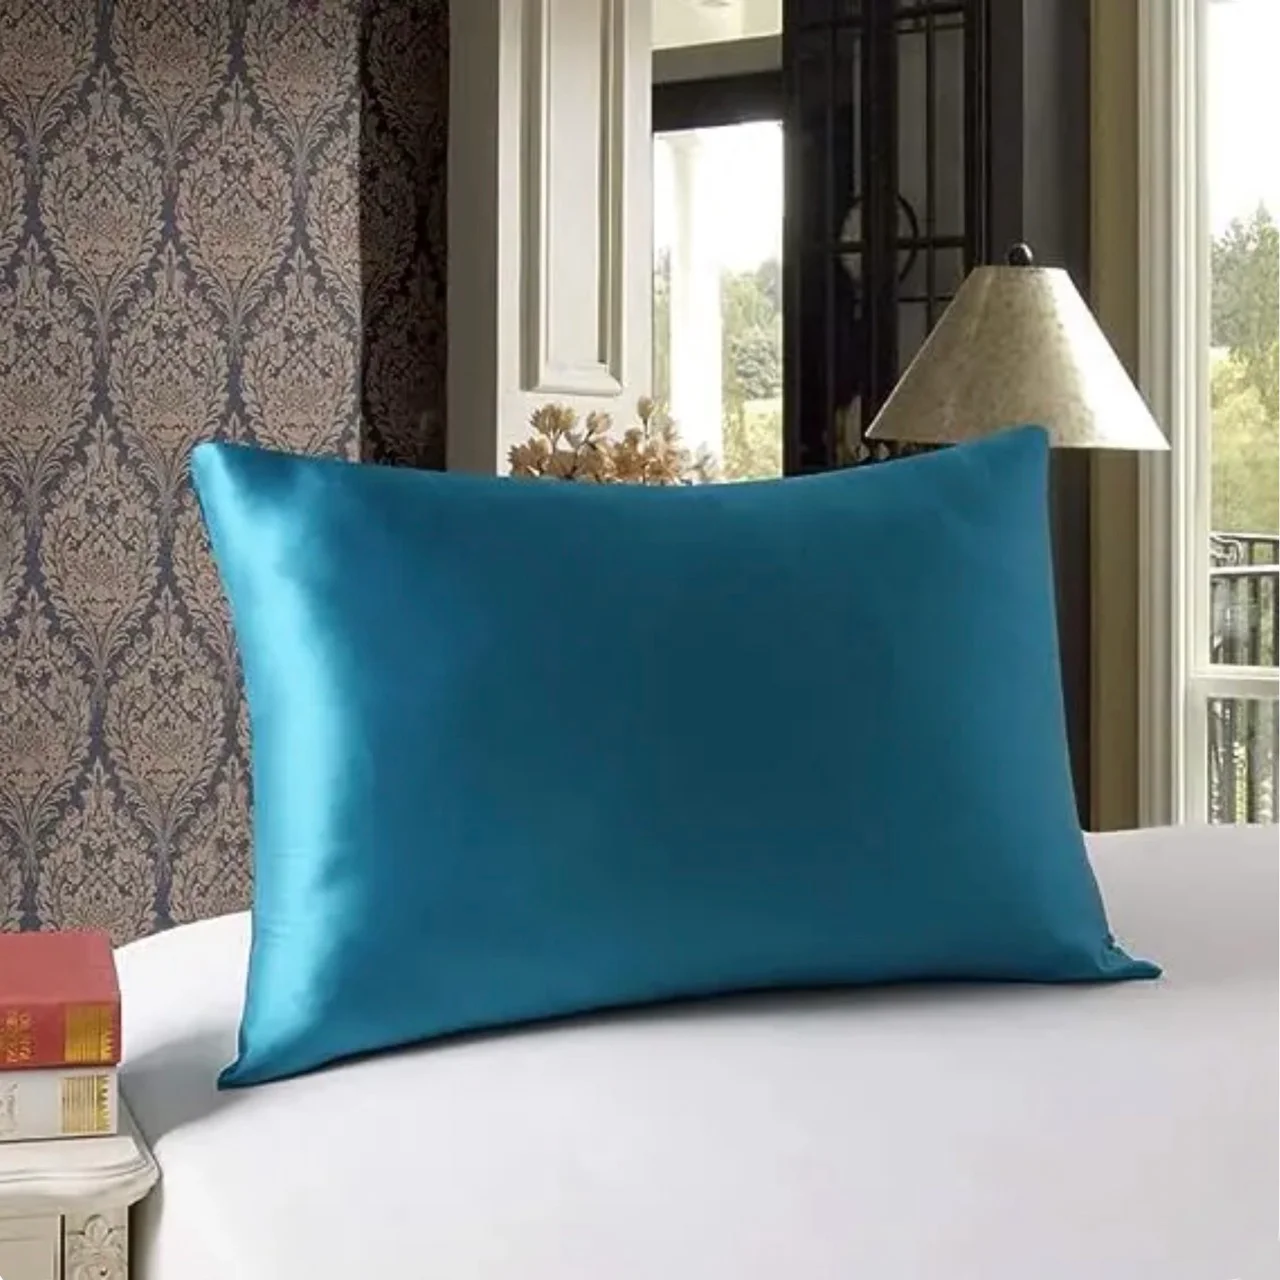 Mulberry silk pillowcase with zipper, dark turquoise